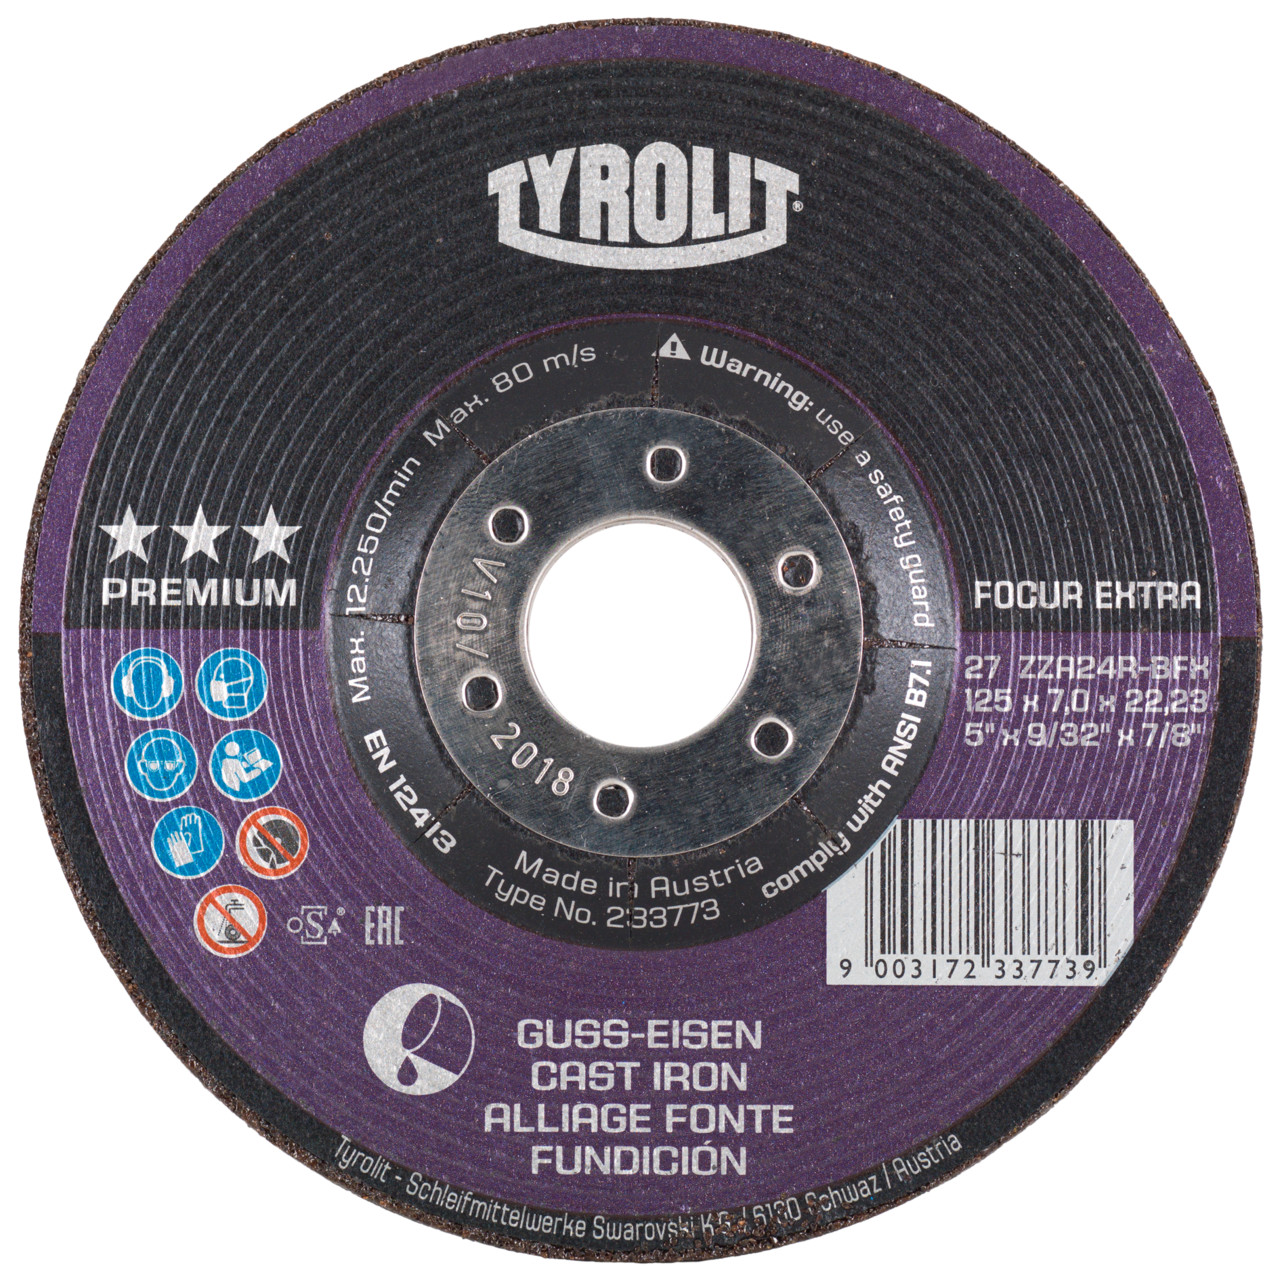 Tyrolit Roughing disc DxUxH 178x7x22.23 FOCUR Extra for cast iron, shape: 27 - offset version, Art. 233768